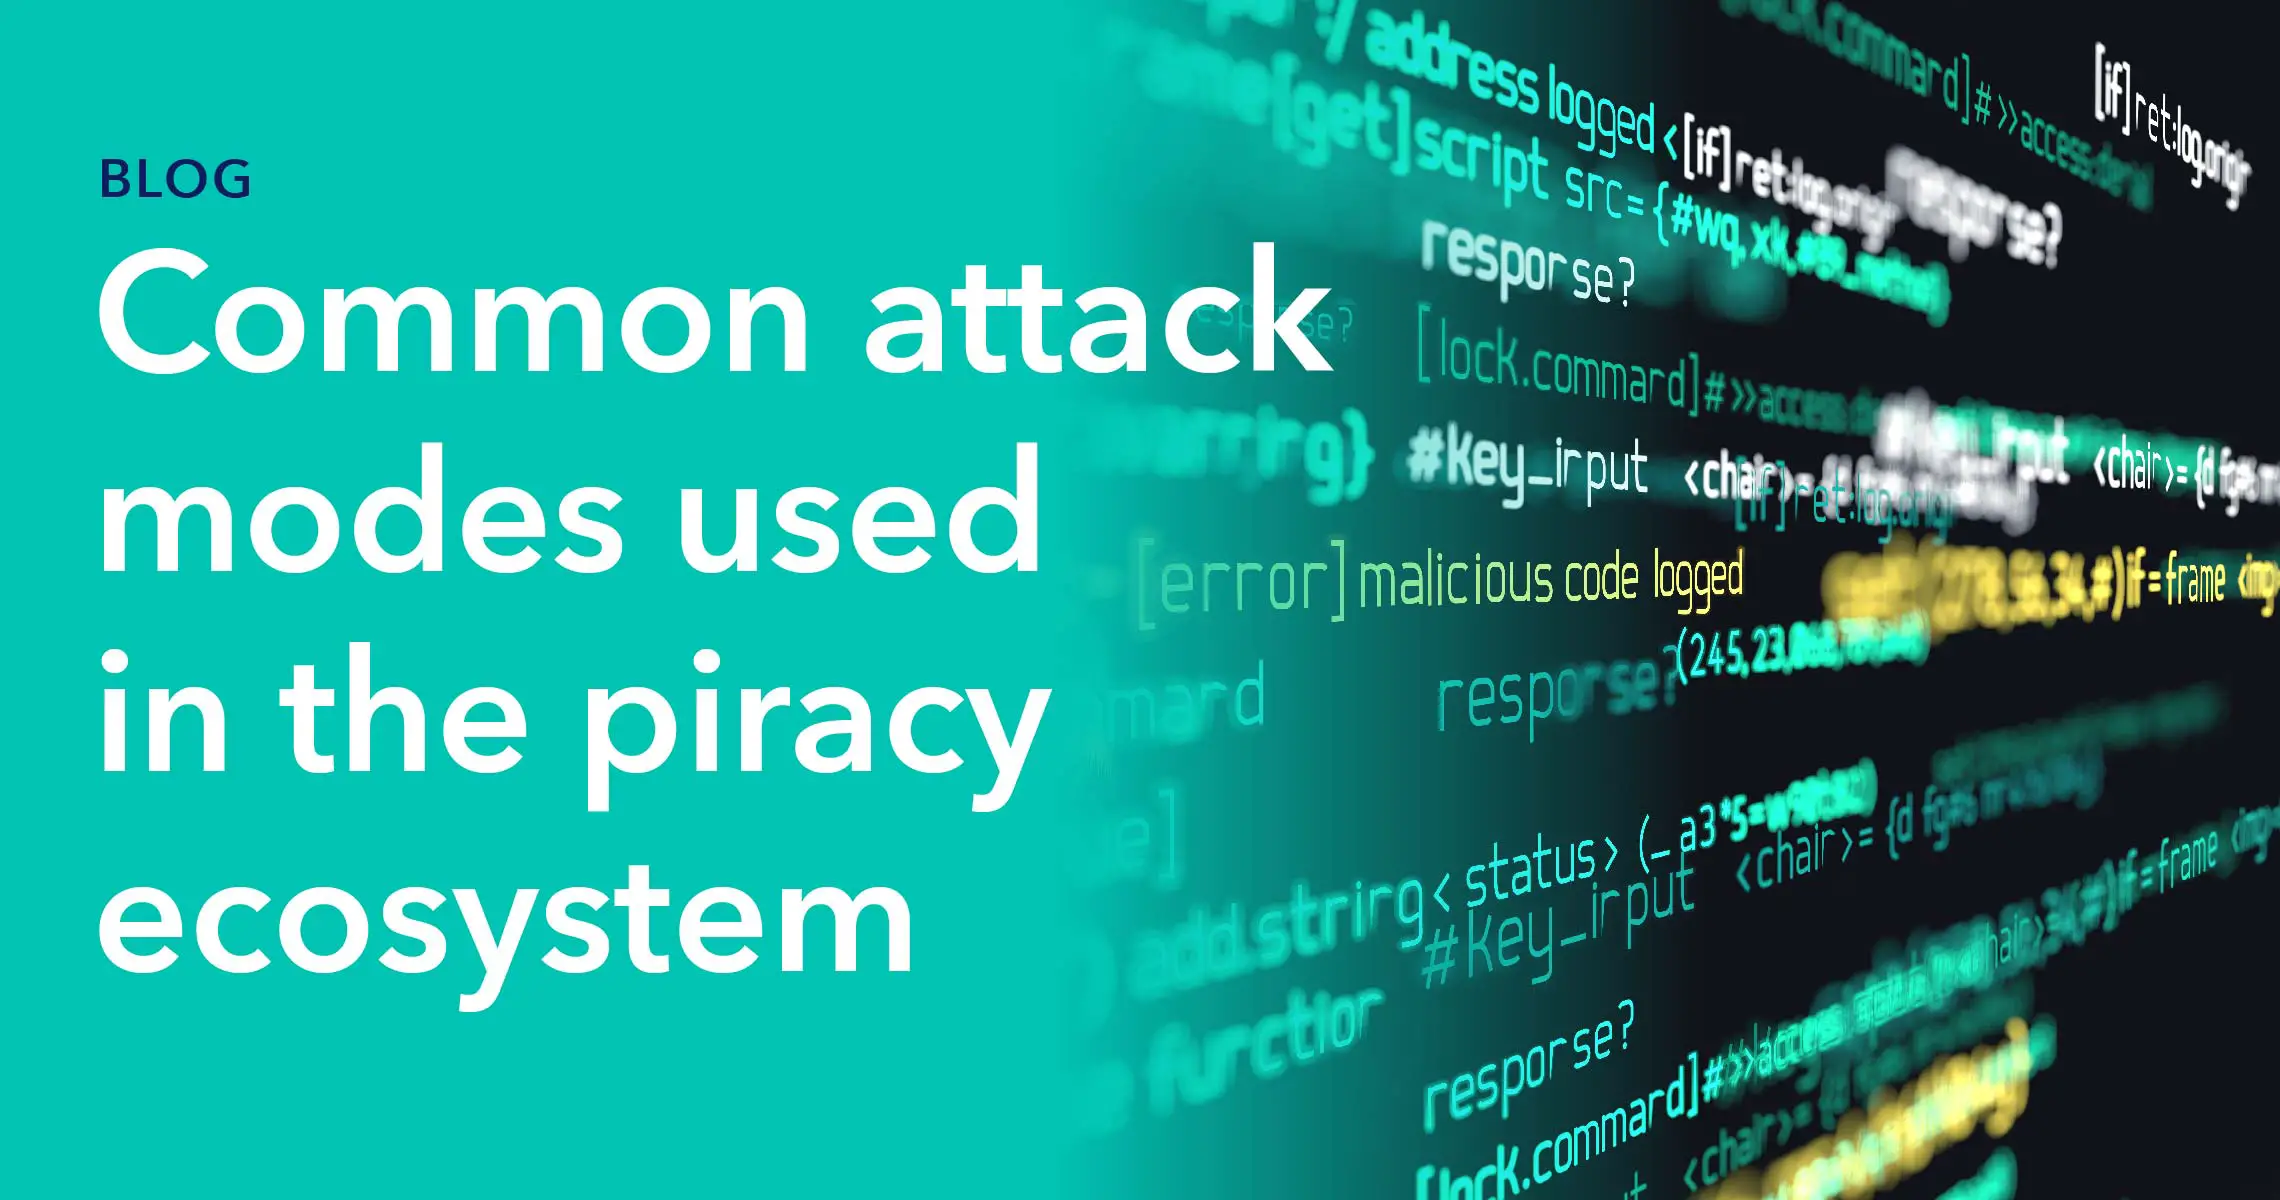 piracy ecosystem-662d1cd5